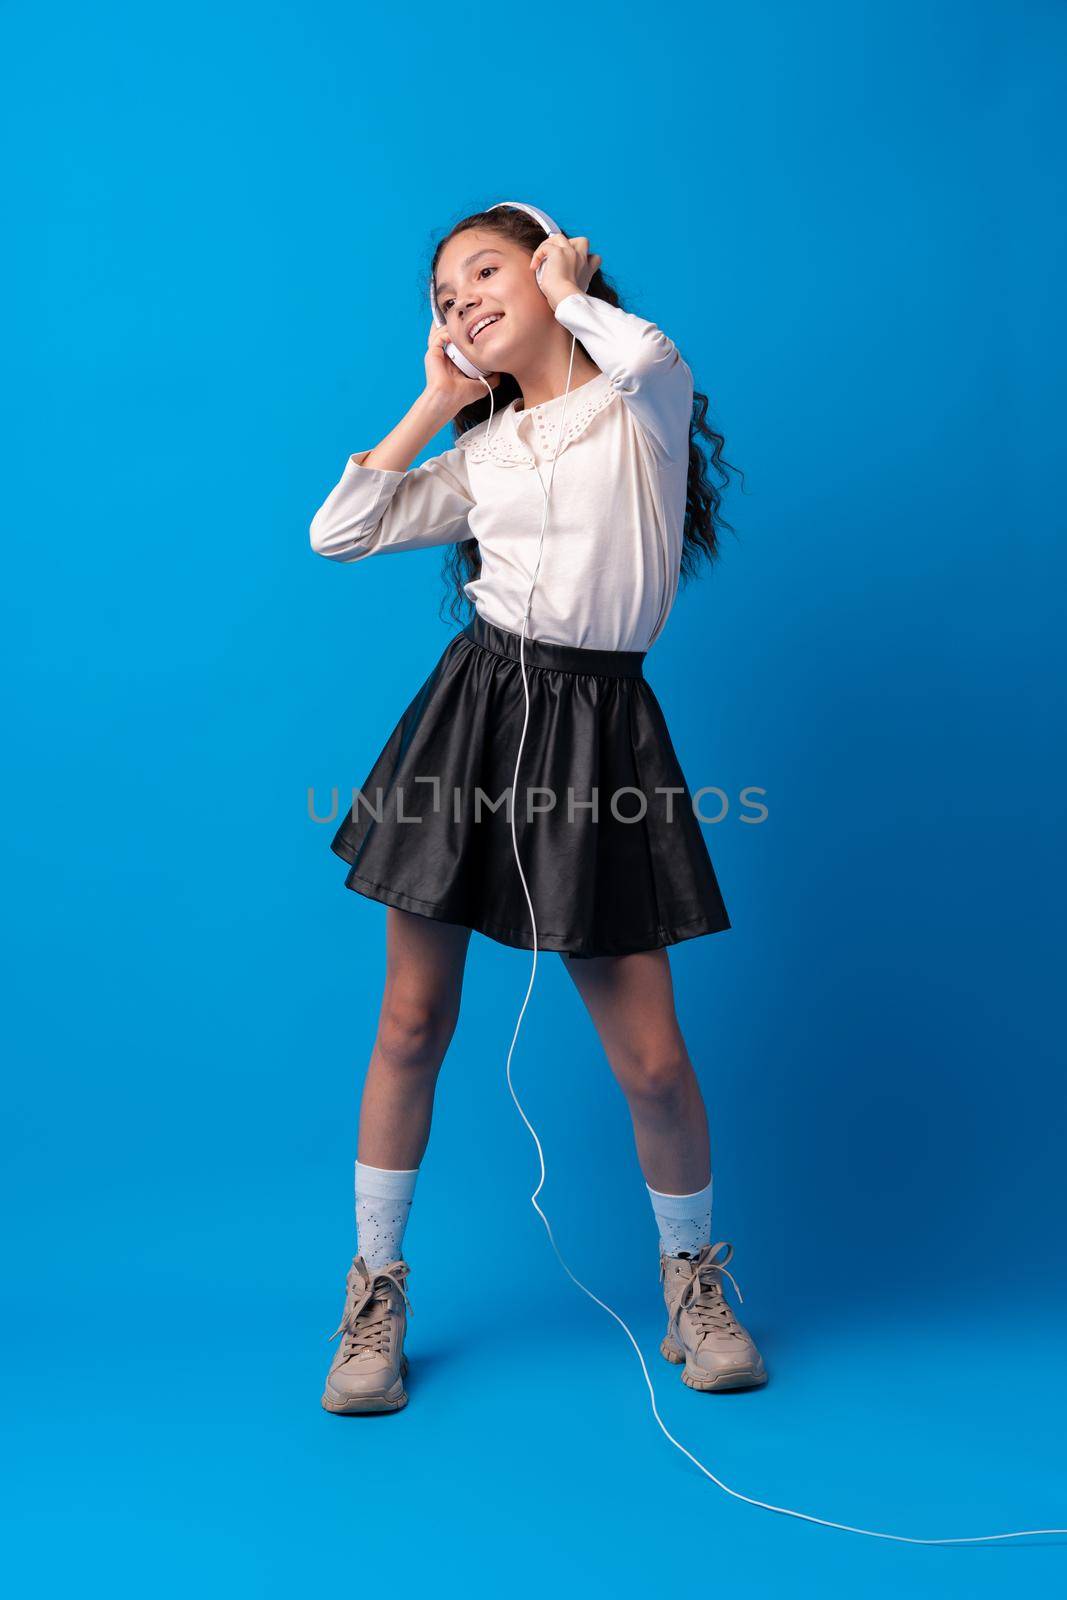 Schoolgirl with headphones listening to music against blue background, portrait